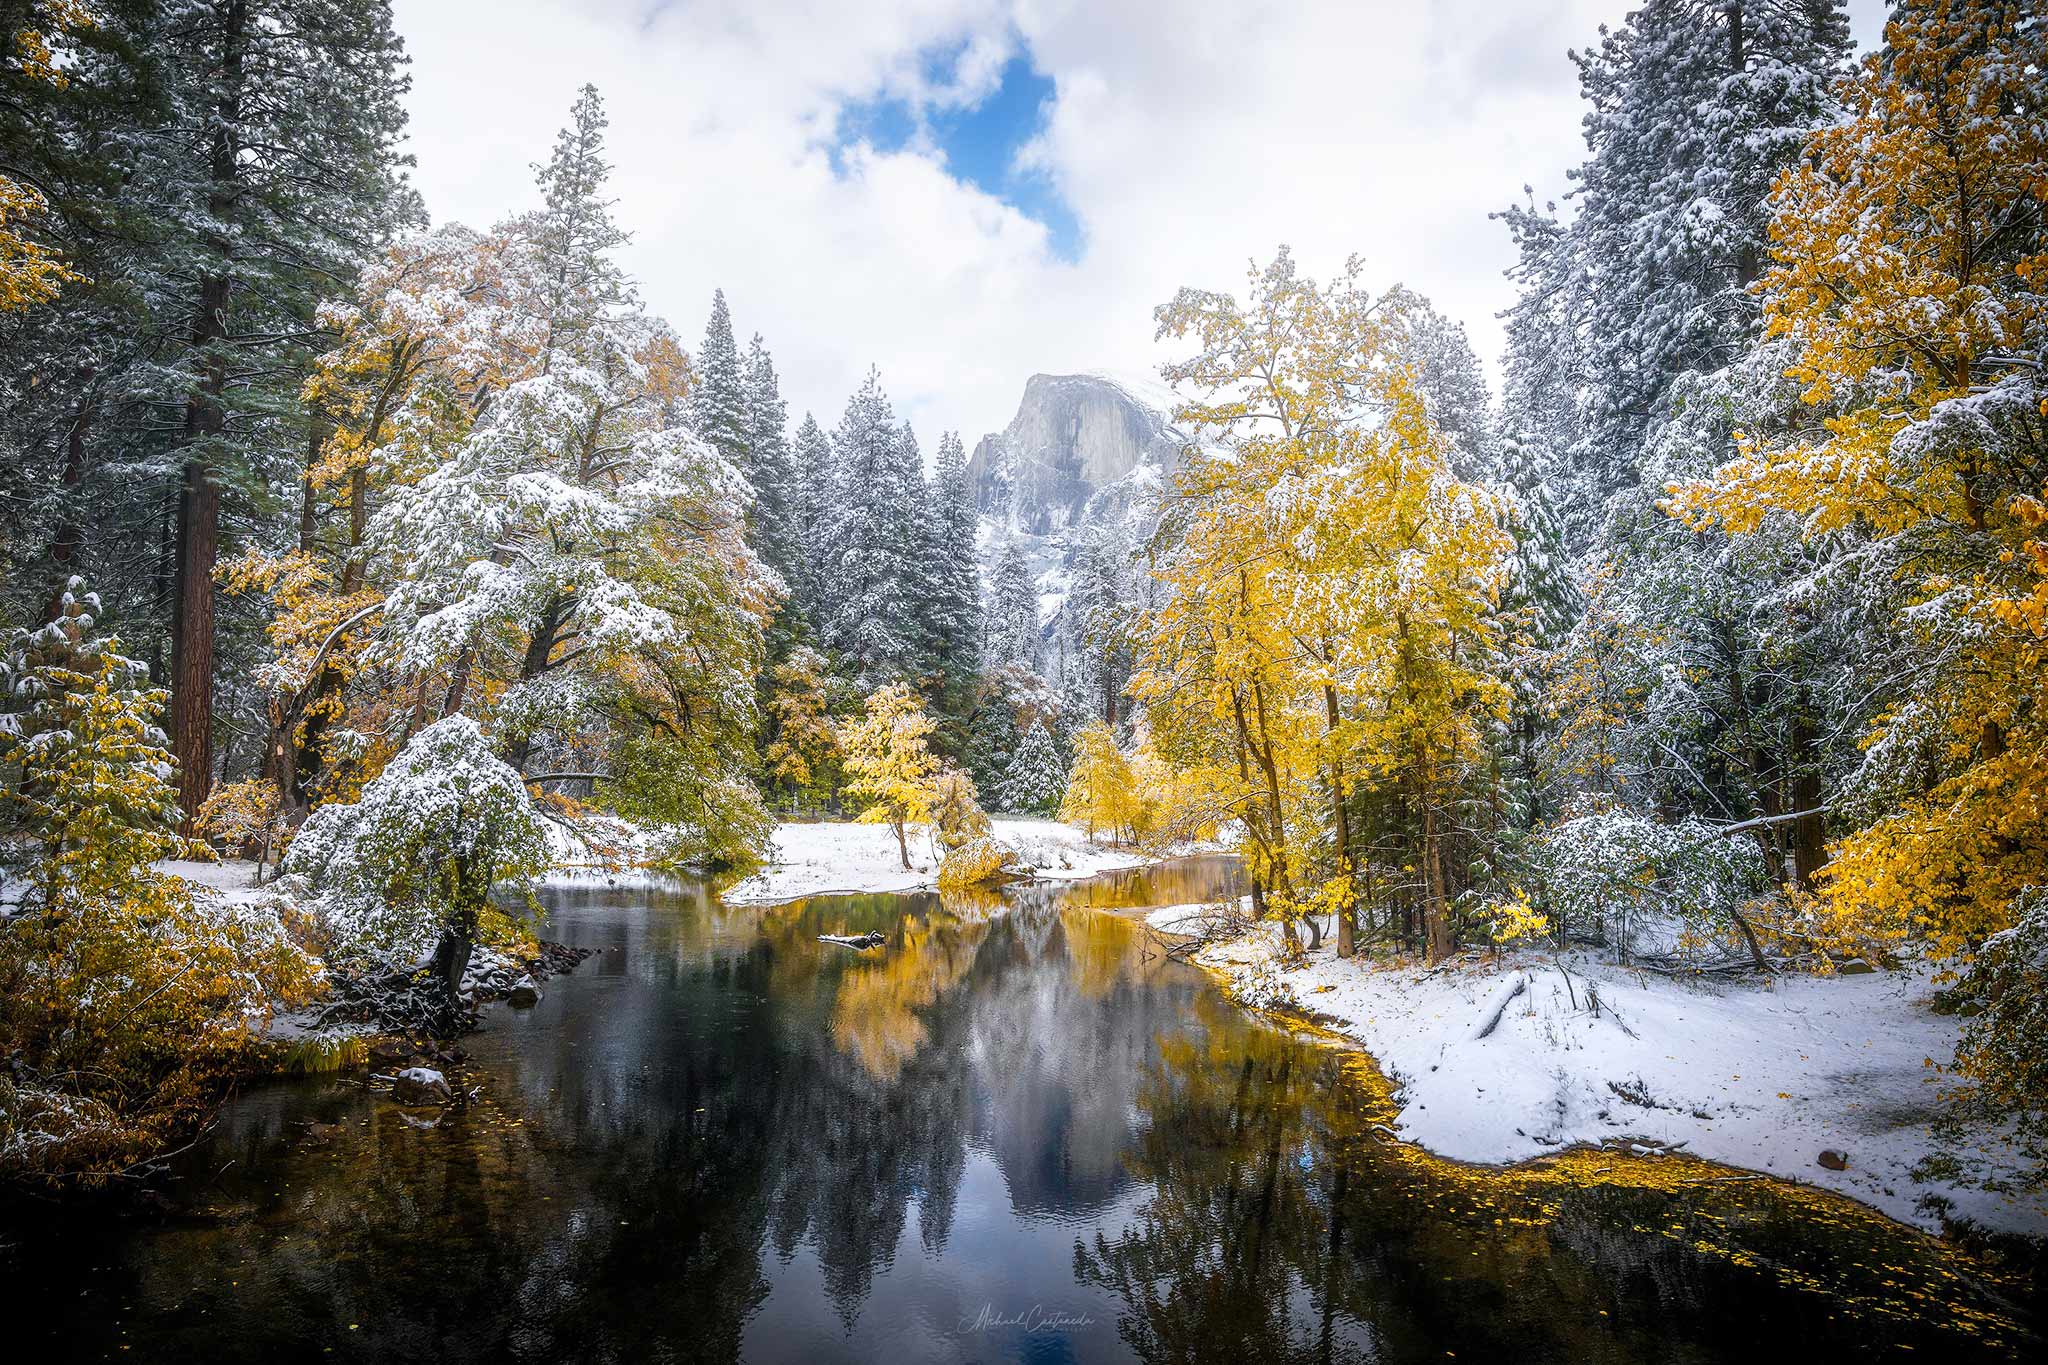 When snow meets fall: Beautiful photo capture 'snowliage' in Yosemite